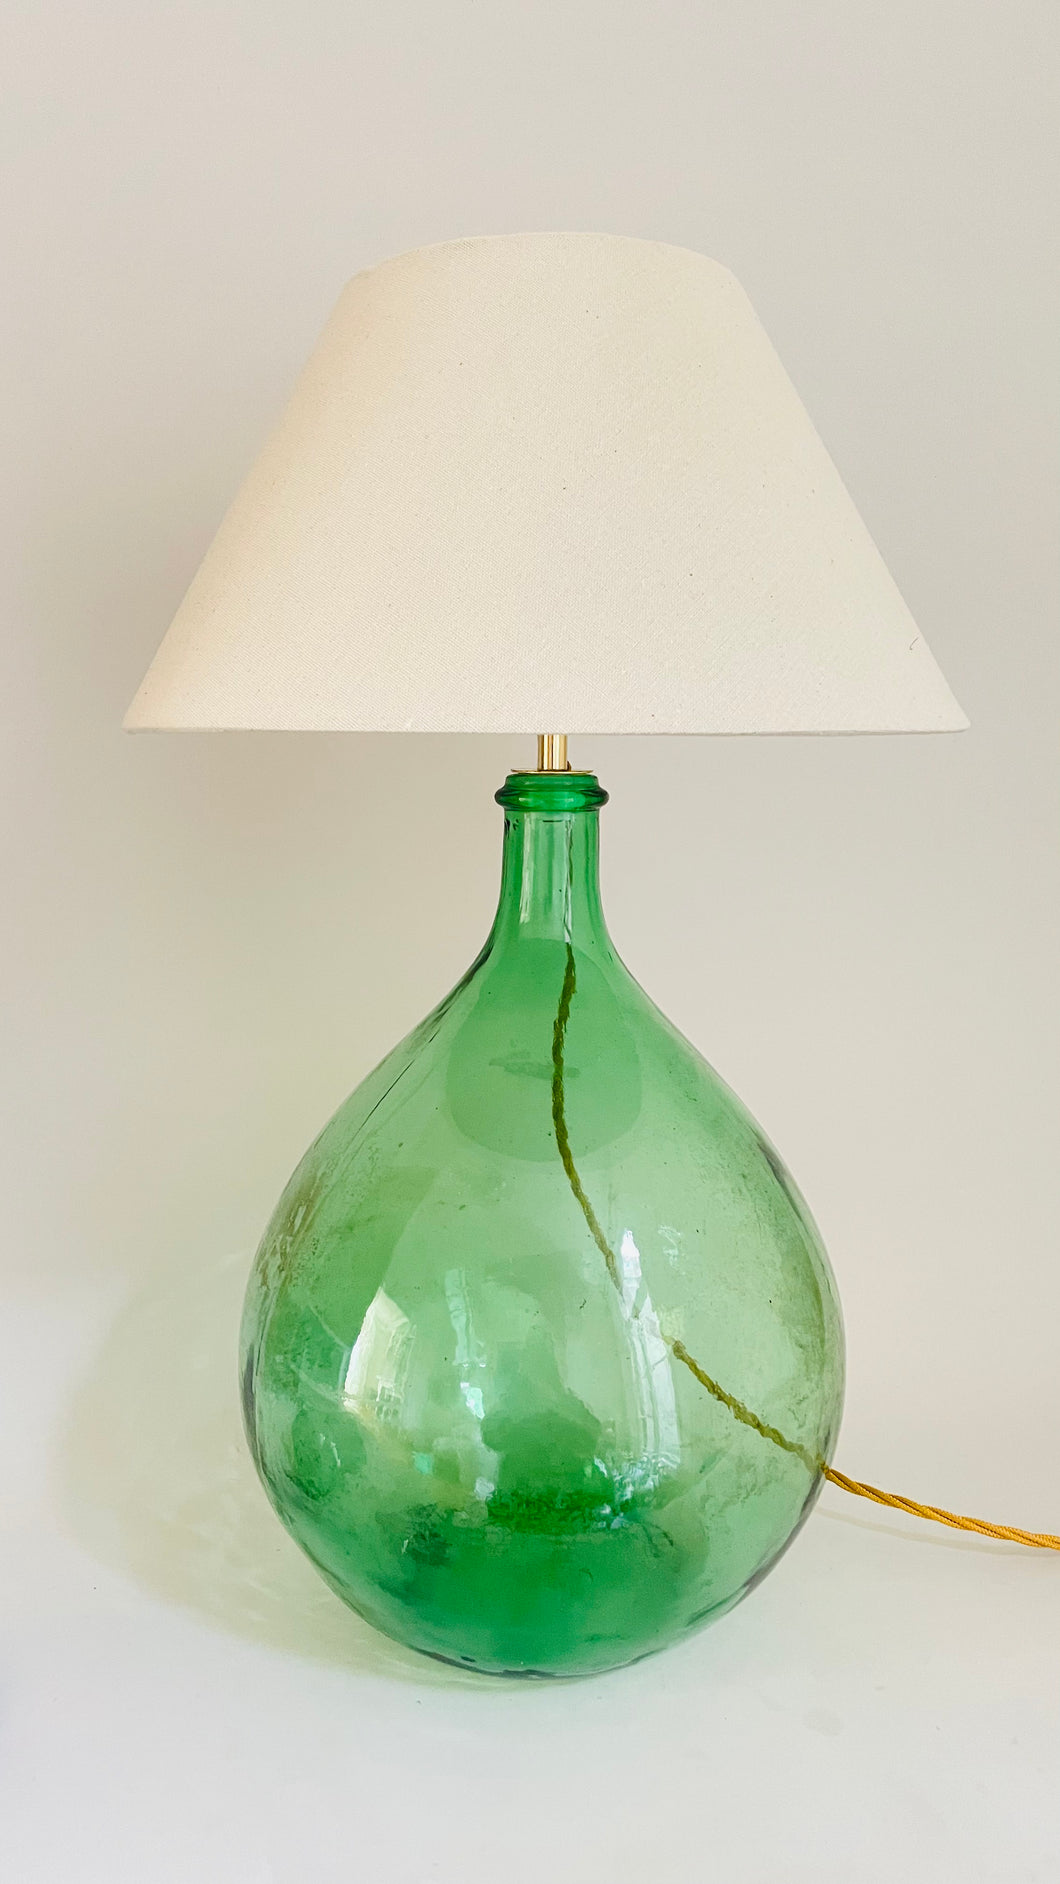 Vintage French Demijohn Bottle Lamp - pre order for mid April